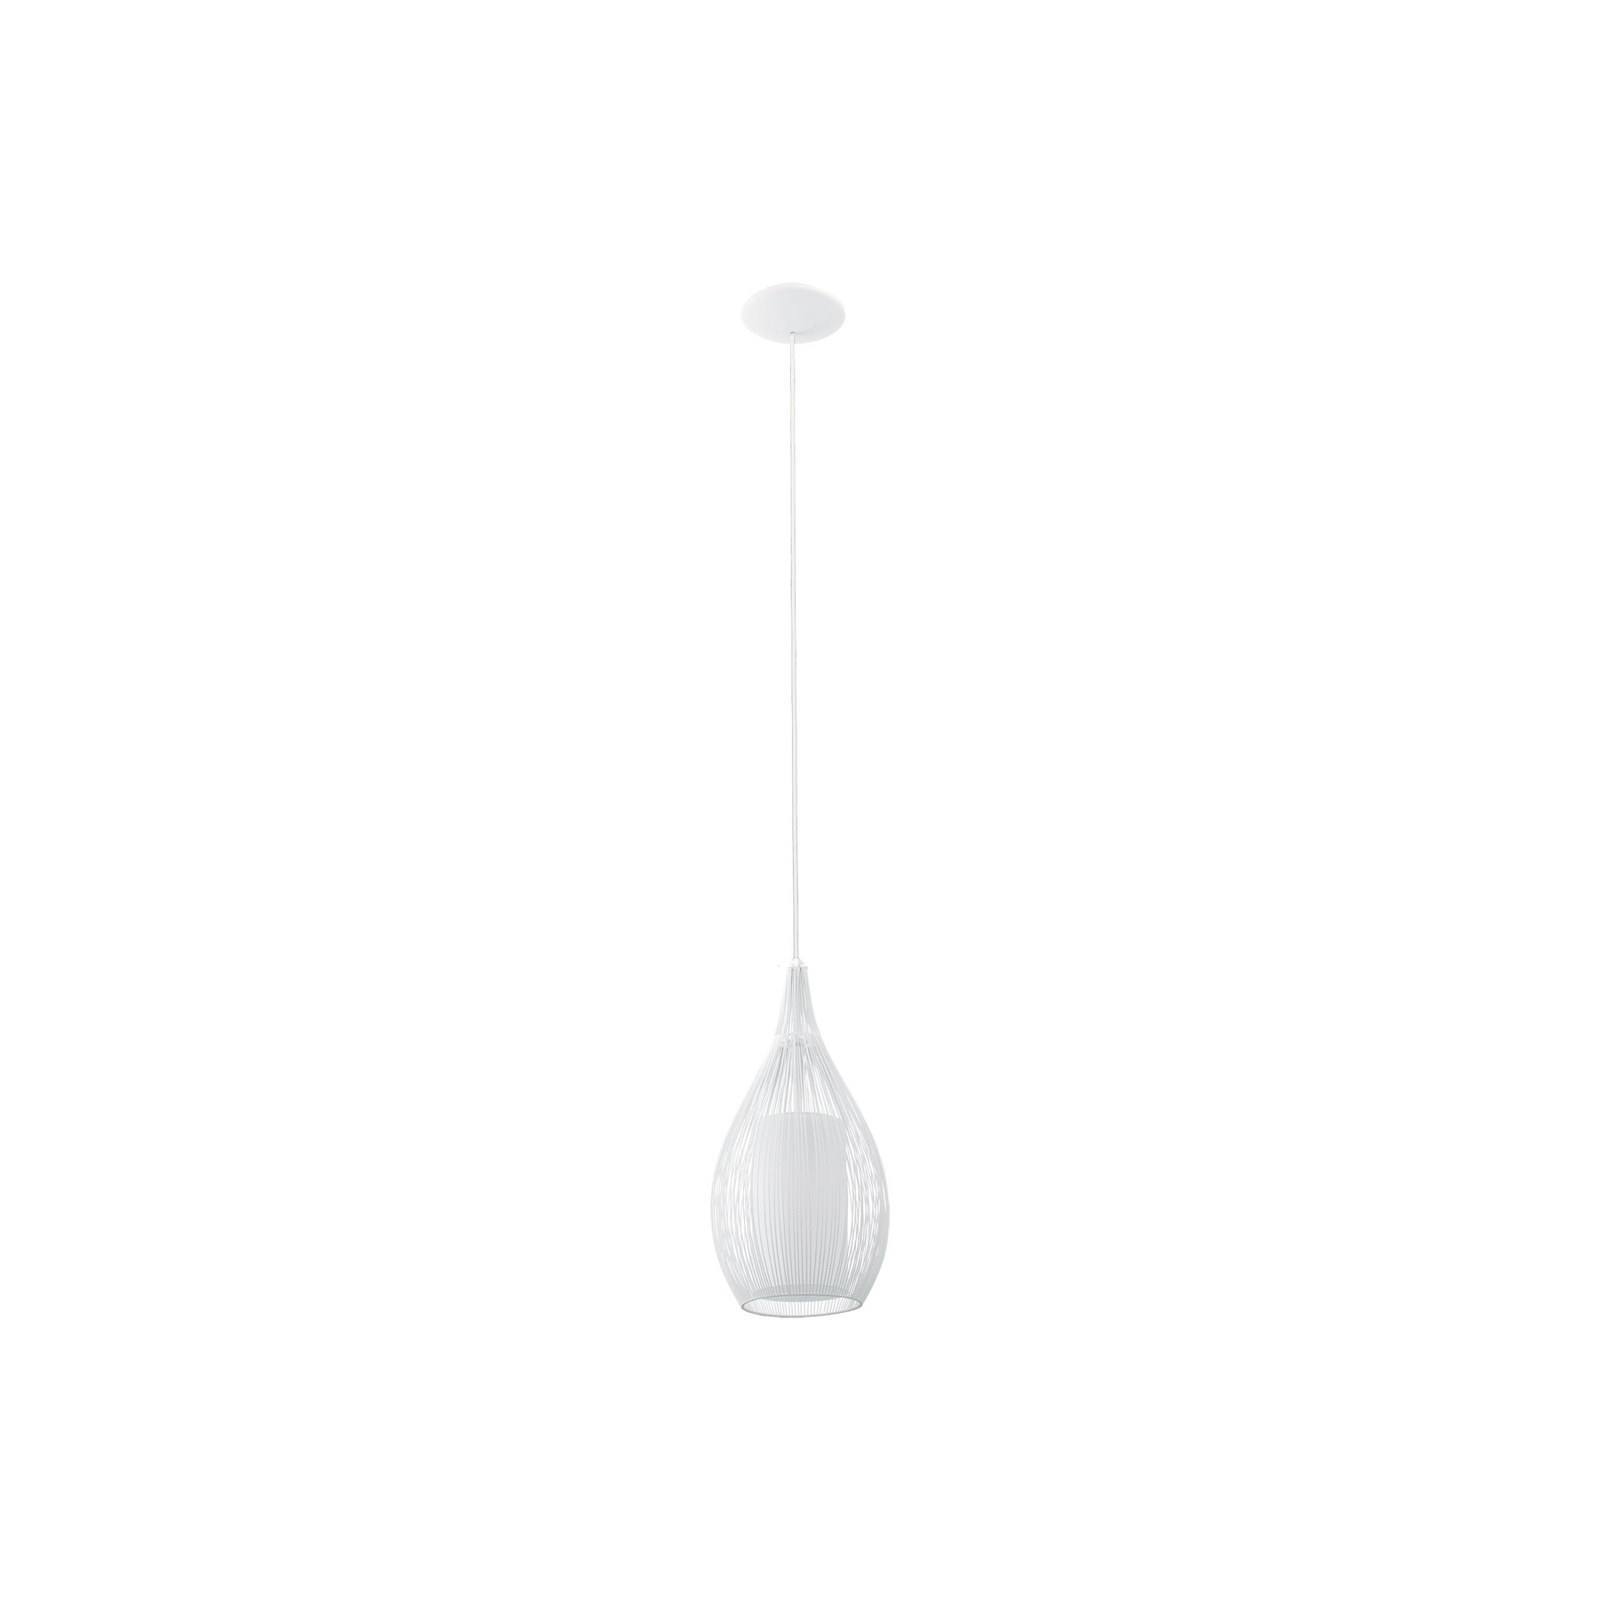 Lampada a sospensione Solis, bianco, metallo, vetro, Ø 19 cm